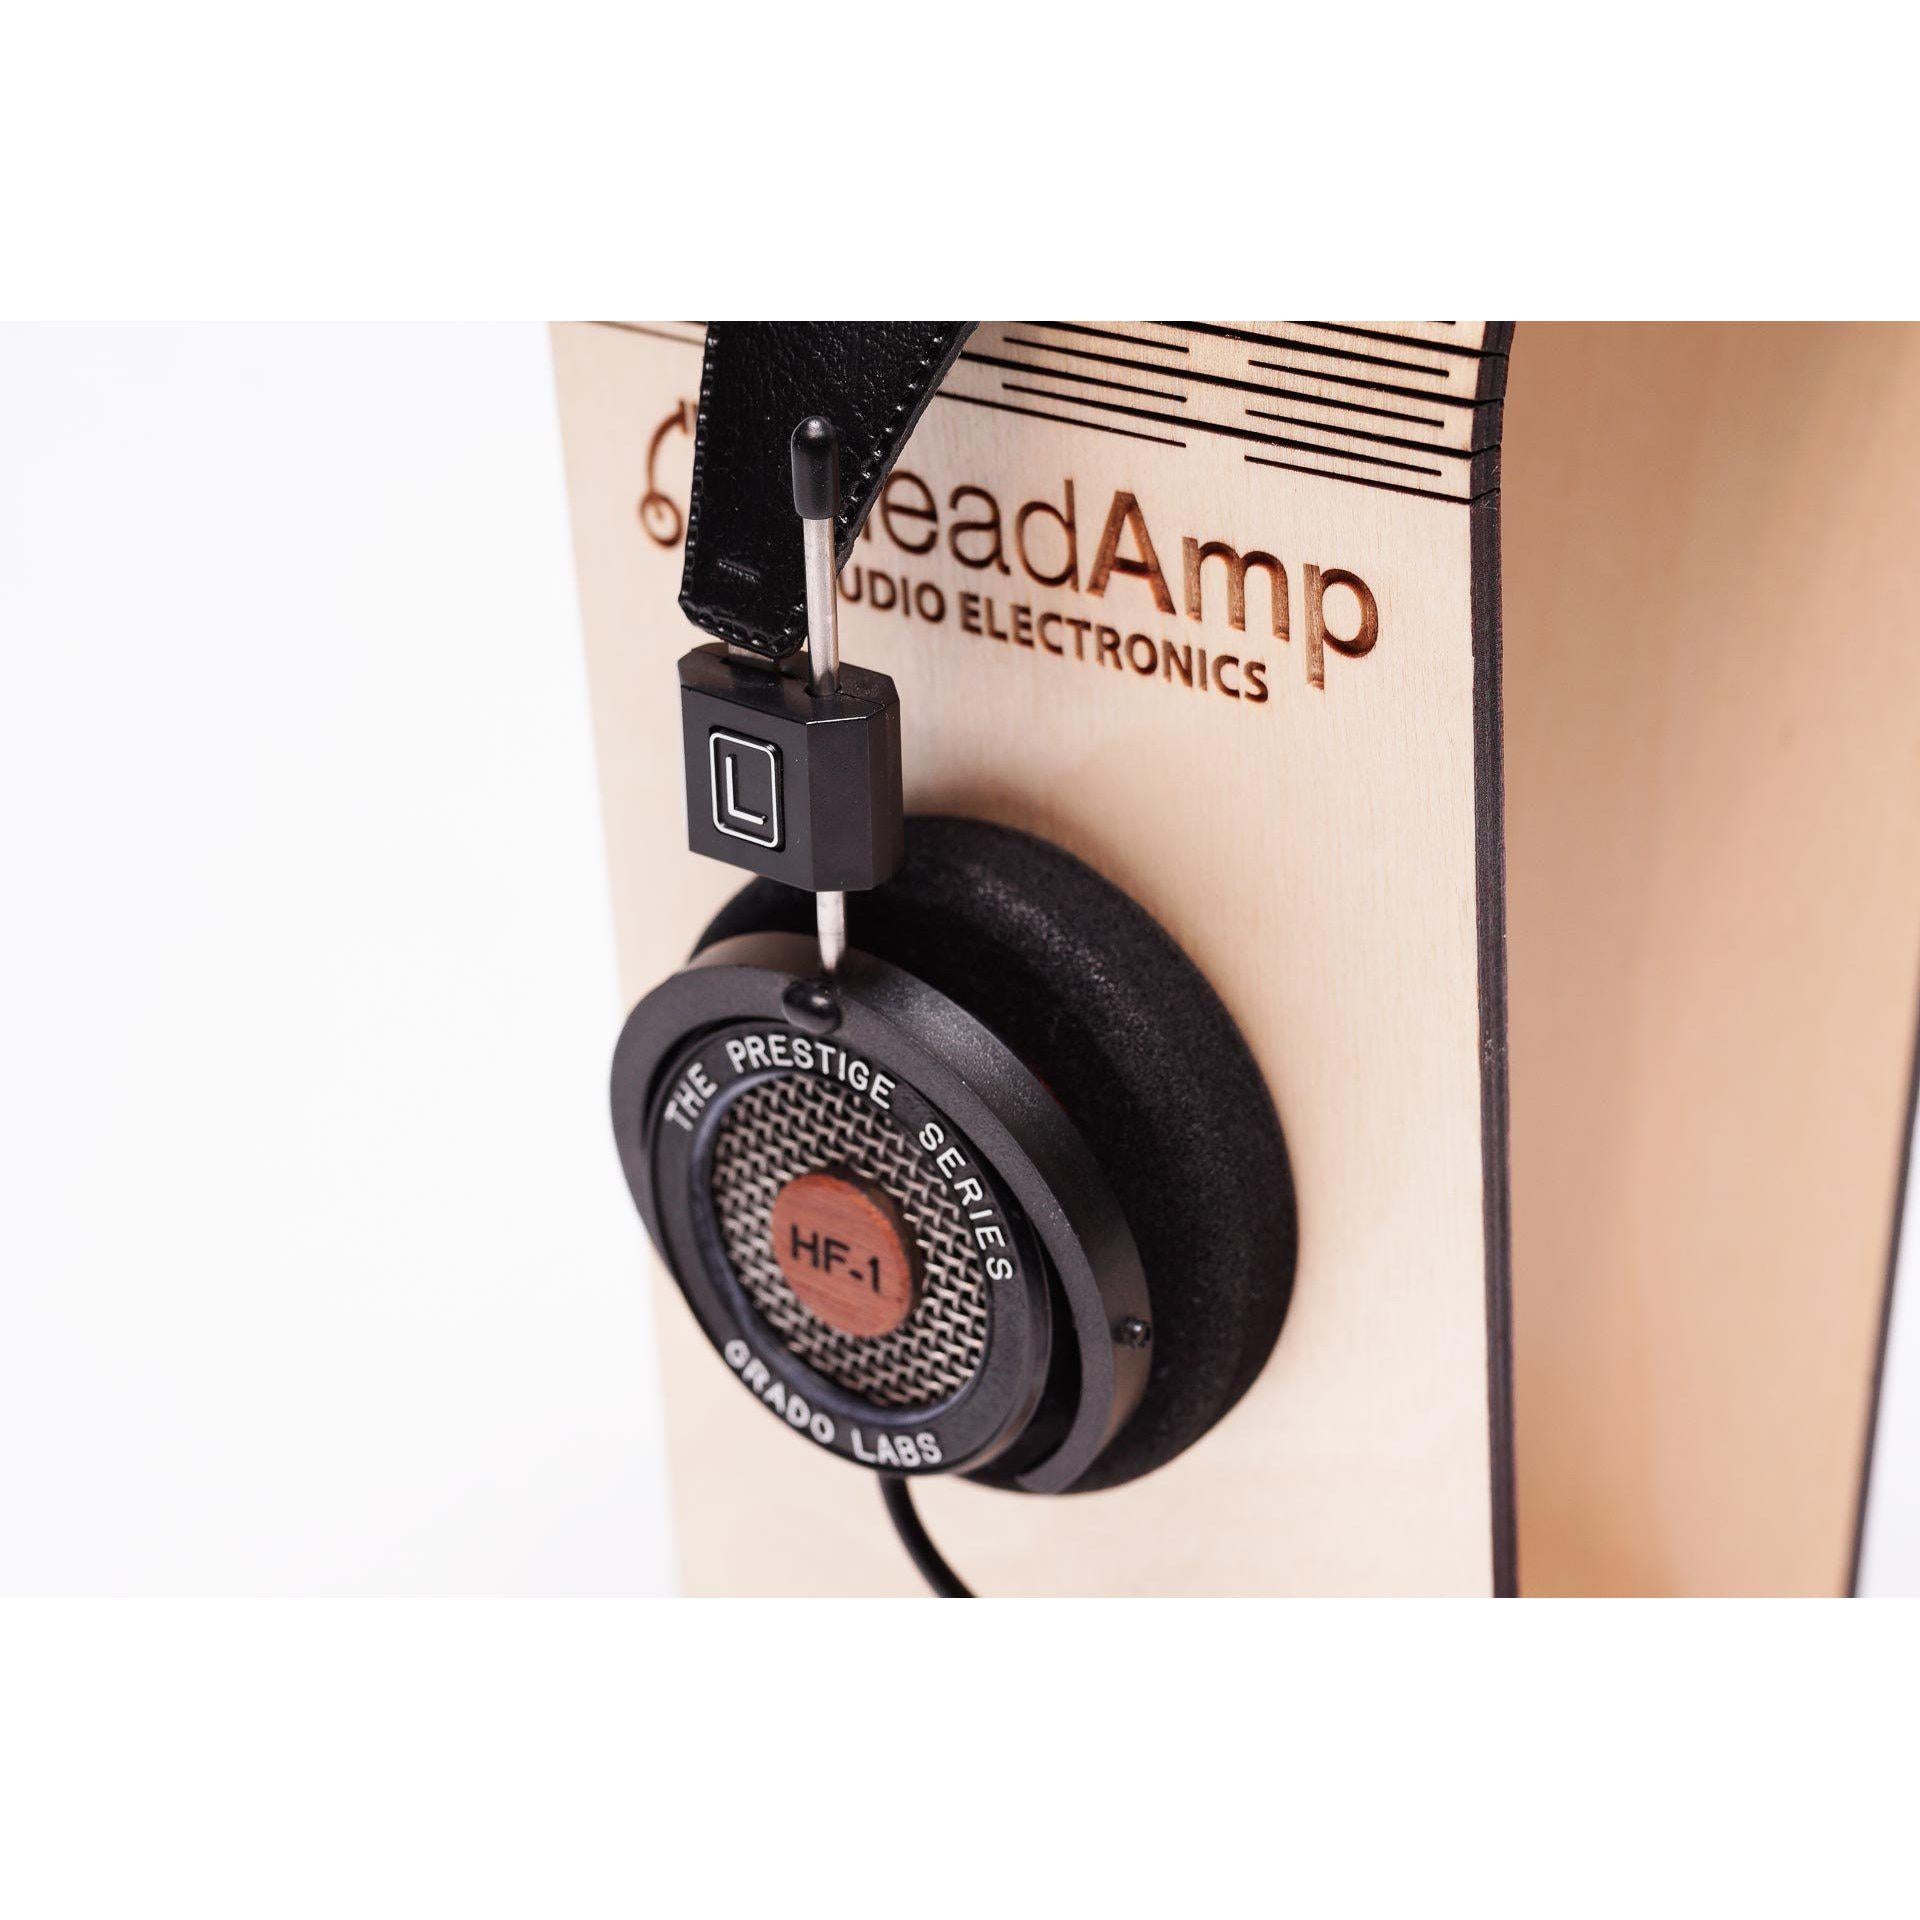 Grado HF-1 Limited Edition Headphone